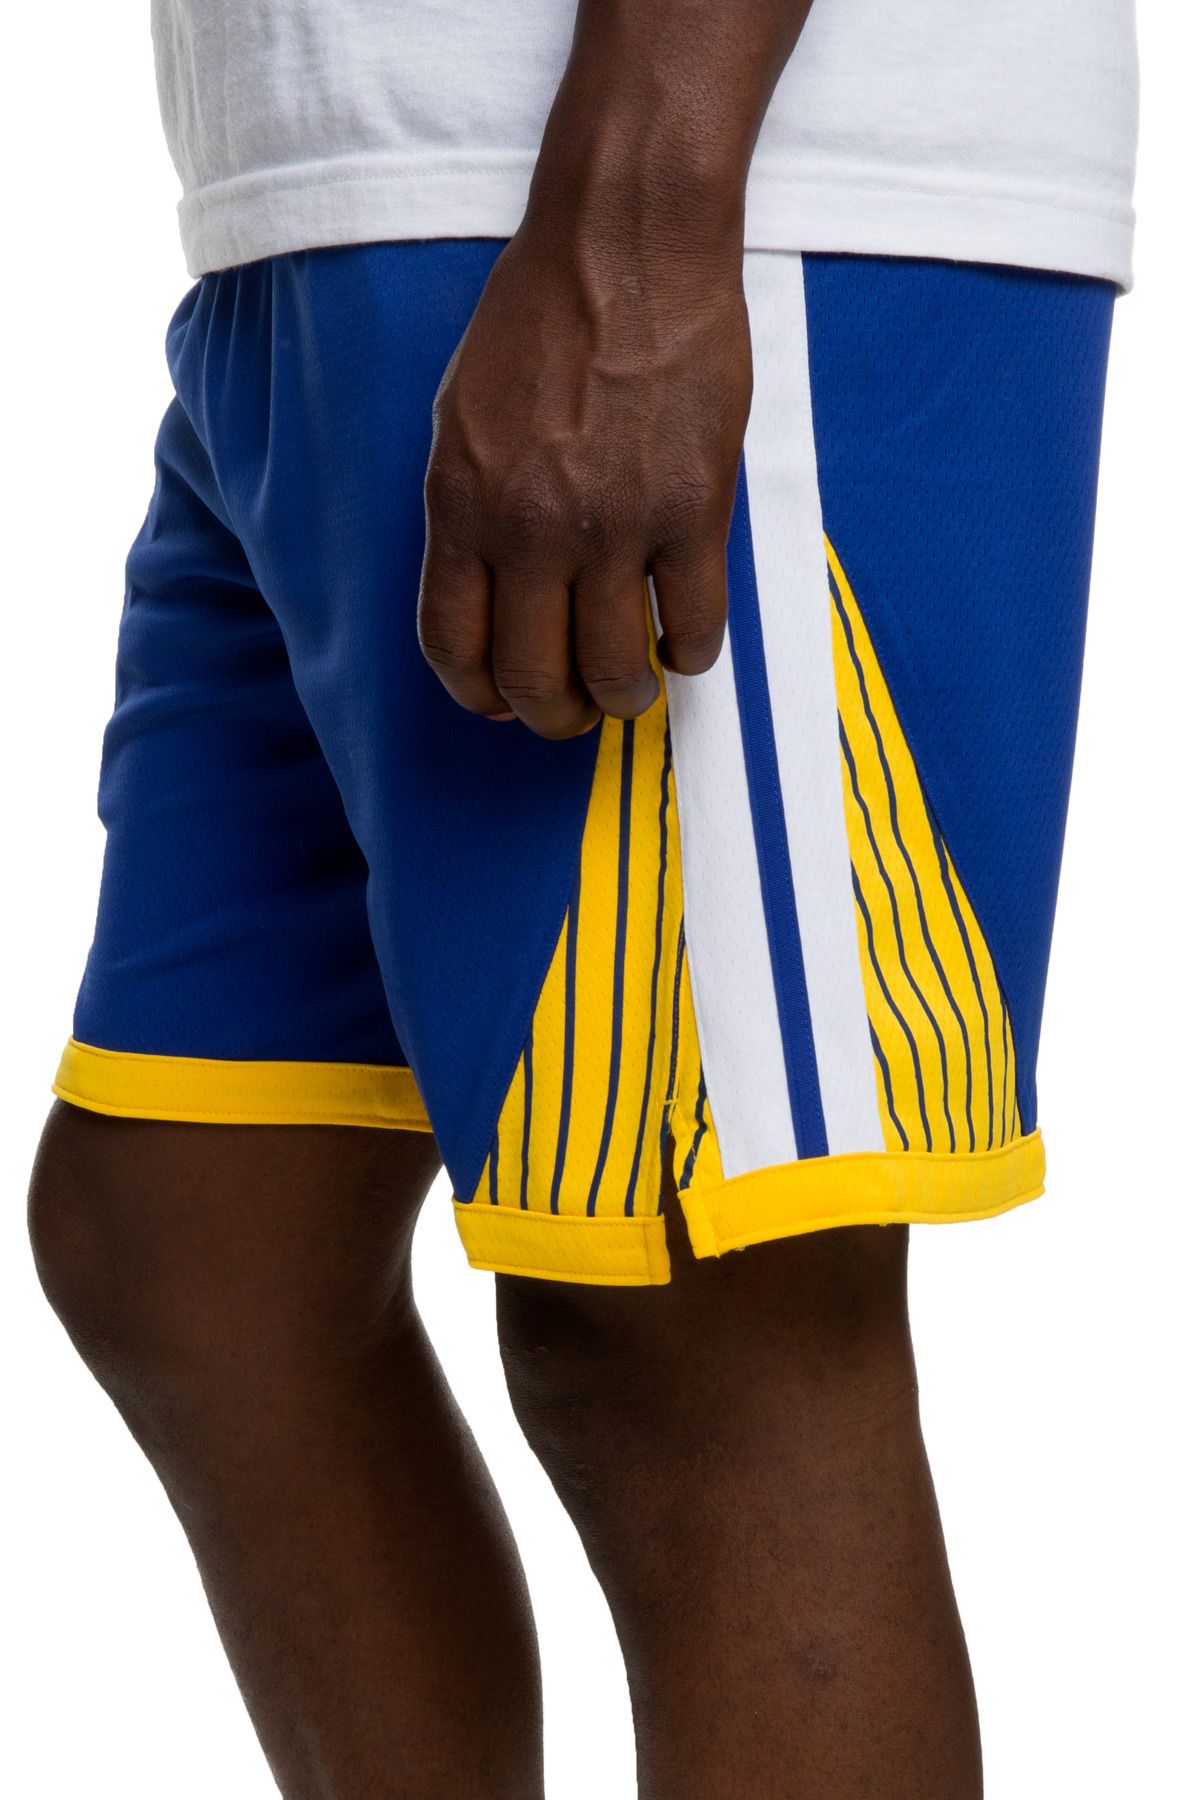 Nike Golden State Warriors Icon Edition NBA Swingman Shorts Blue